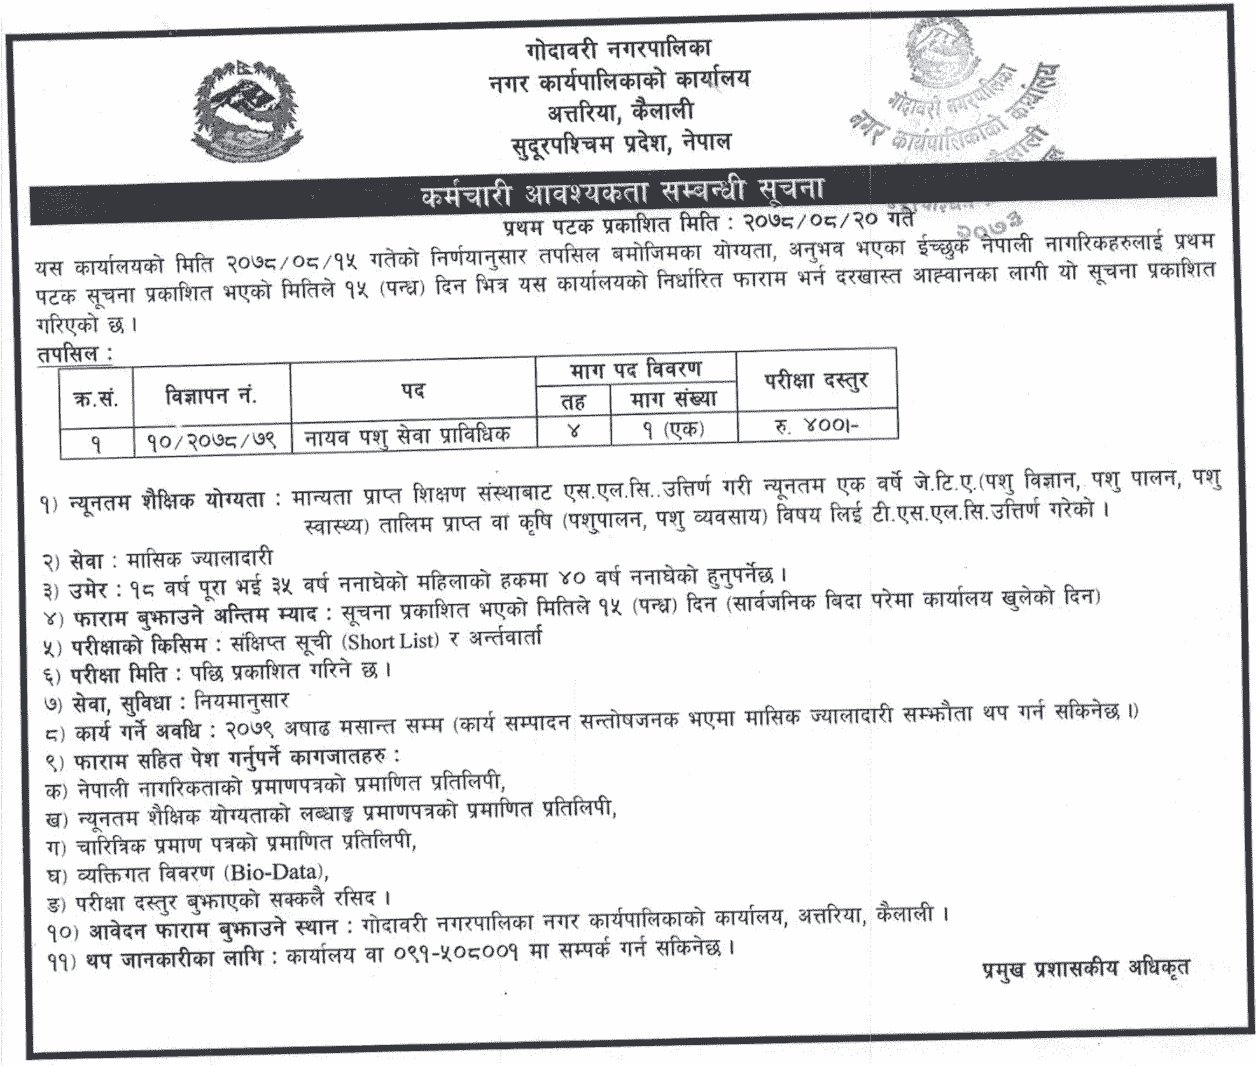 Godawari Municipality Kailali Vacancy for JTA